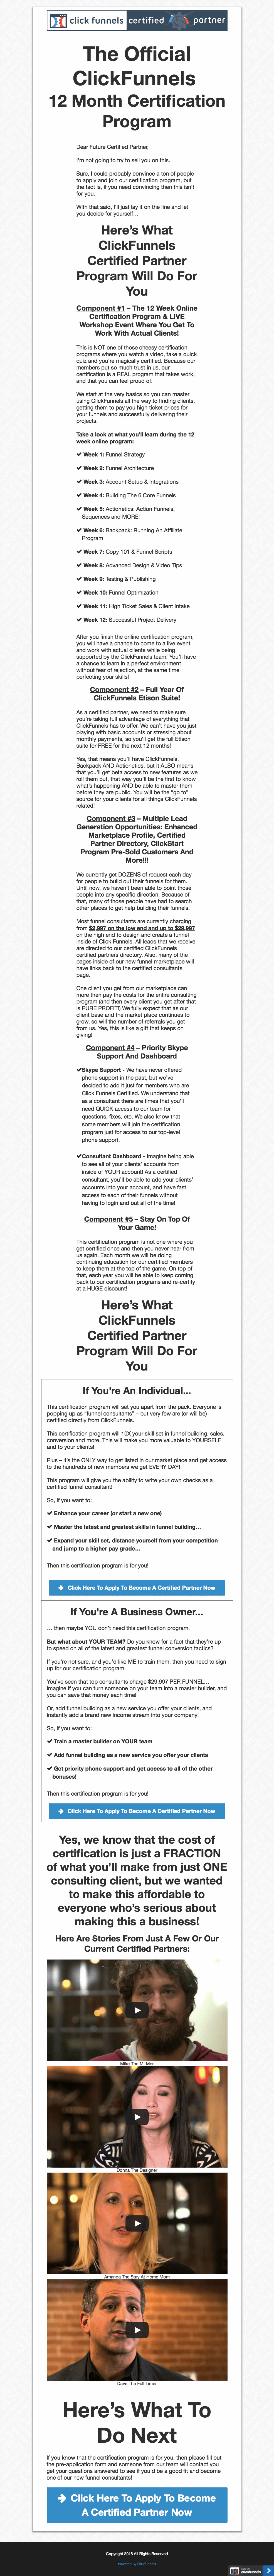 ClickFunnels Application